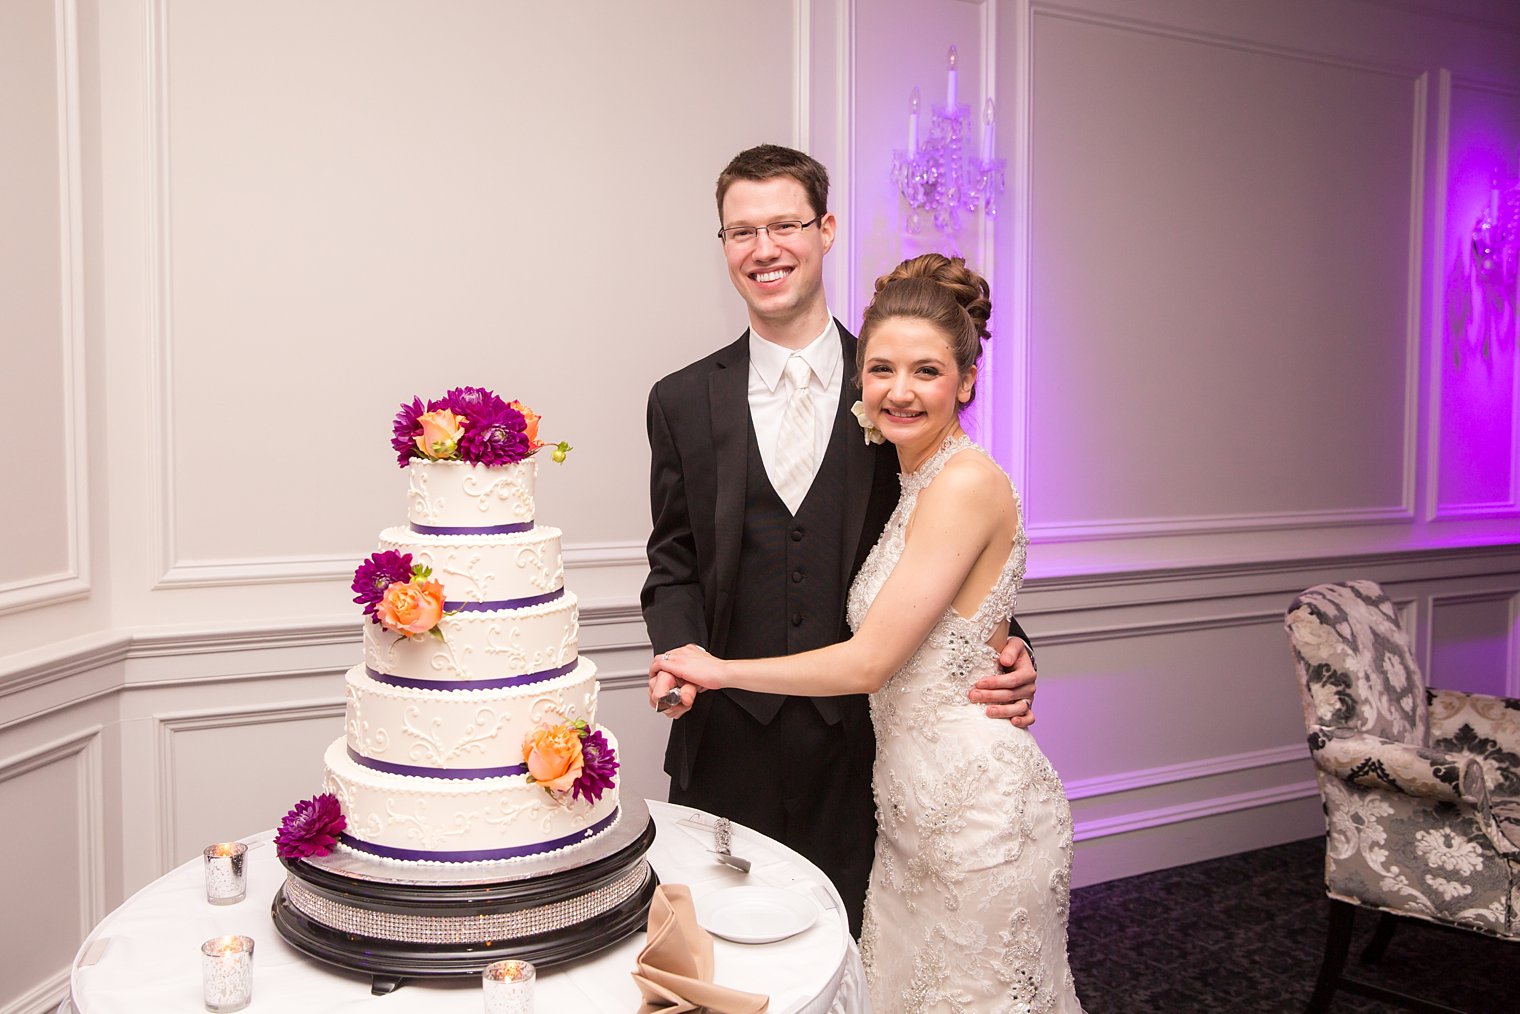 Basking Ridge Country Club bride and groom cake cutting photo